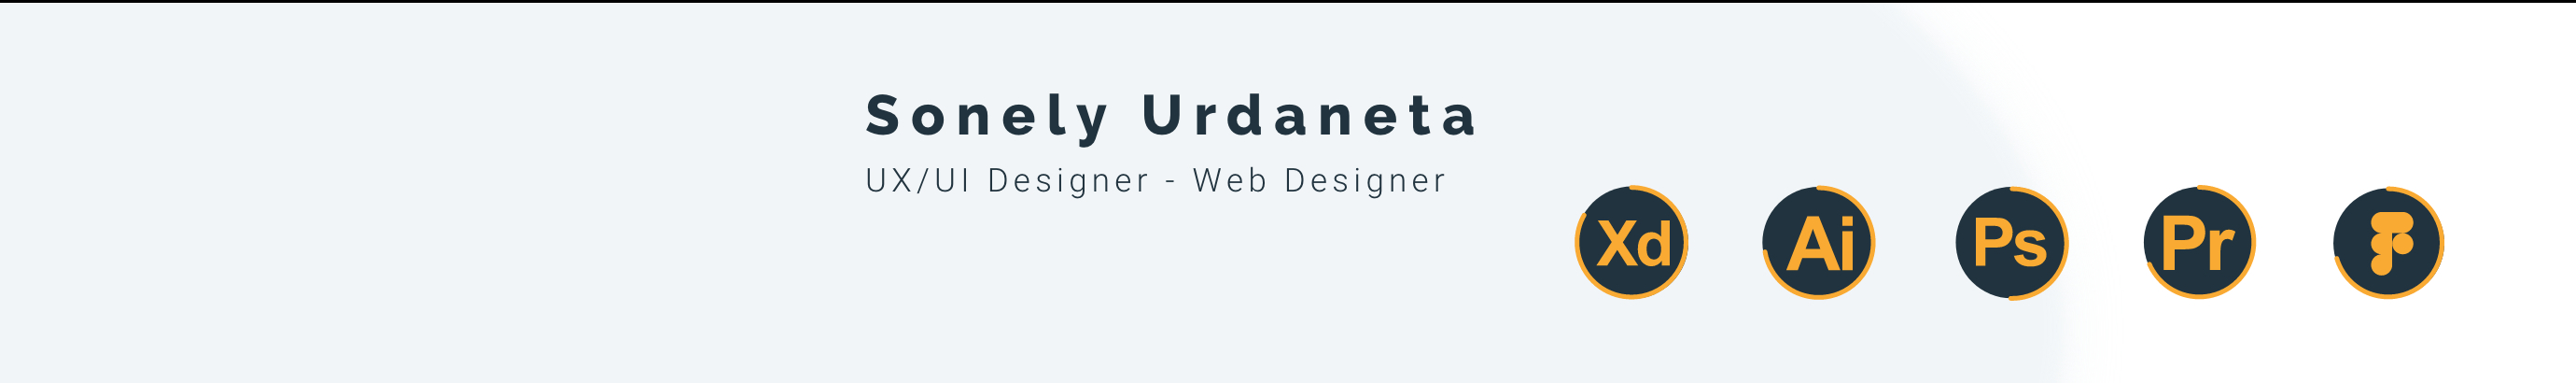 Sonely Urdaneta's profile banner